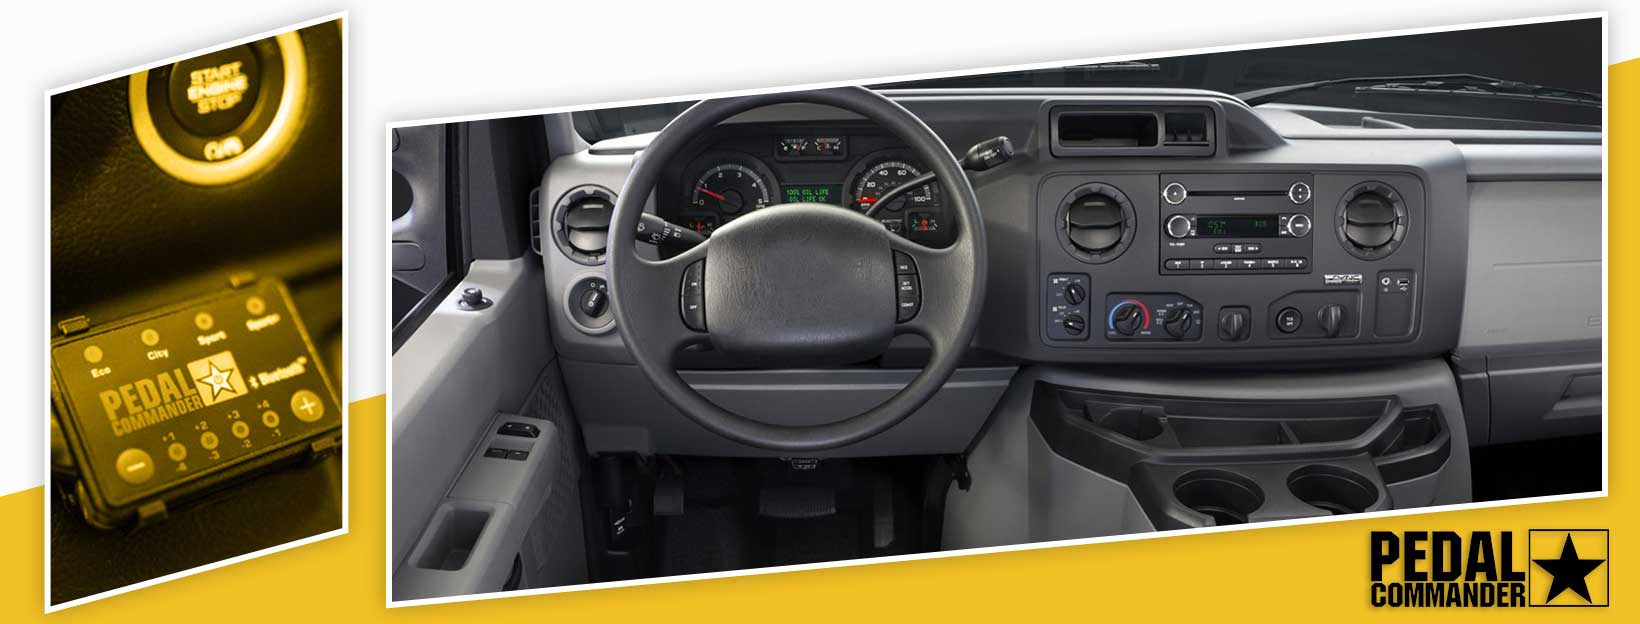 Pedal Commander for Ford E250 - interior